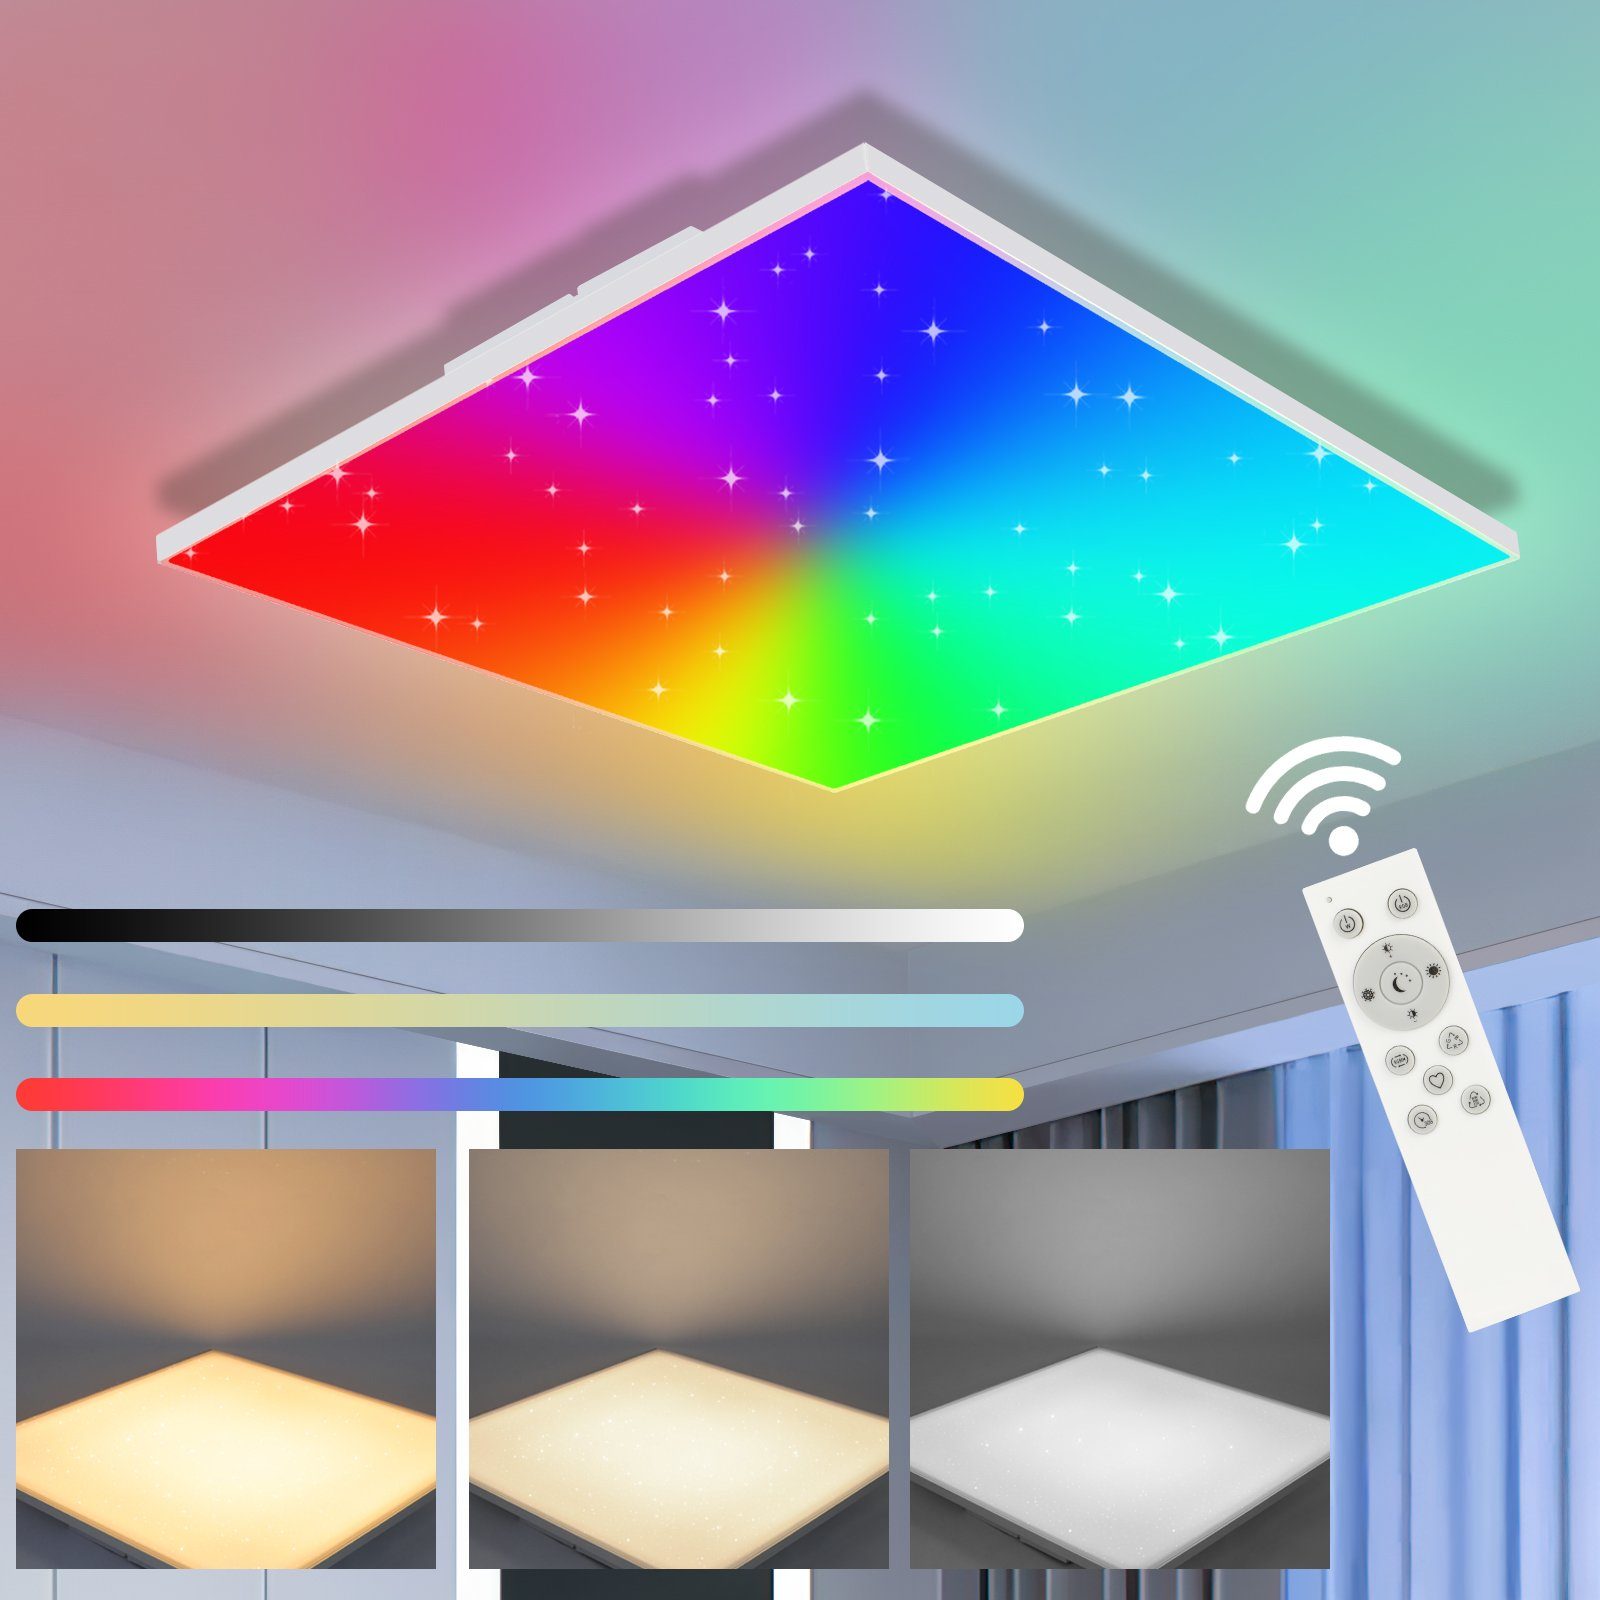 Nettlife LED Deckenleuchte Dimmbar 18W RGB Farbwechsel Sternenhimmel Panel  Flach, LED fest integriert, mit Fernbedienung